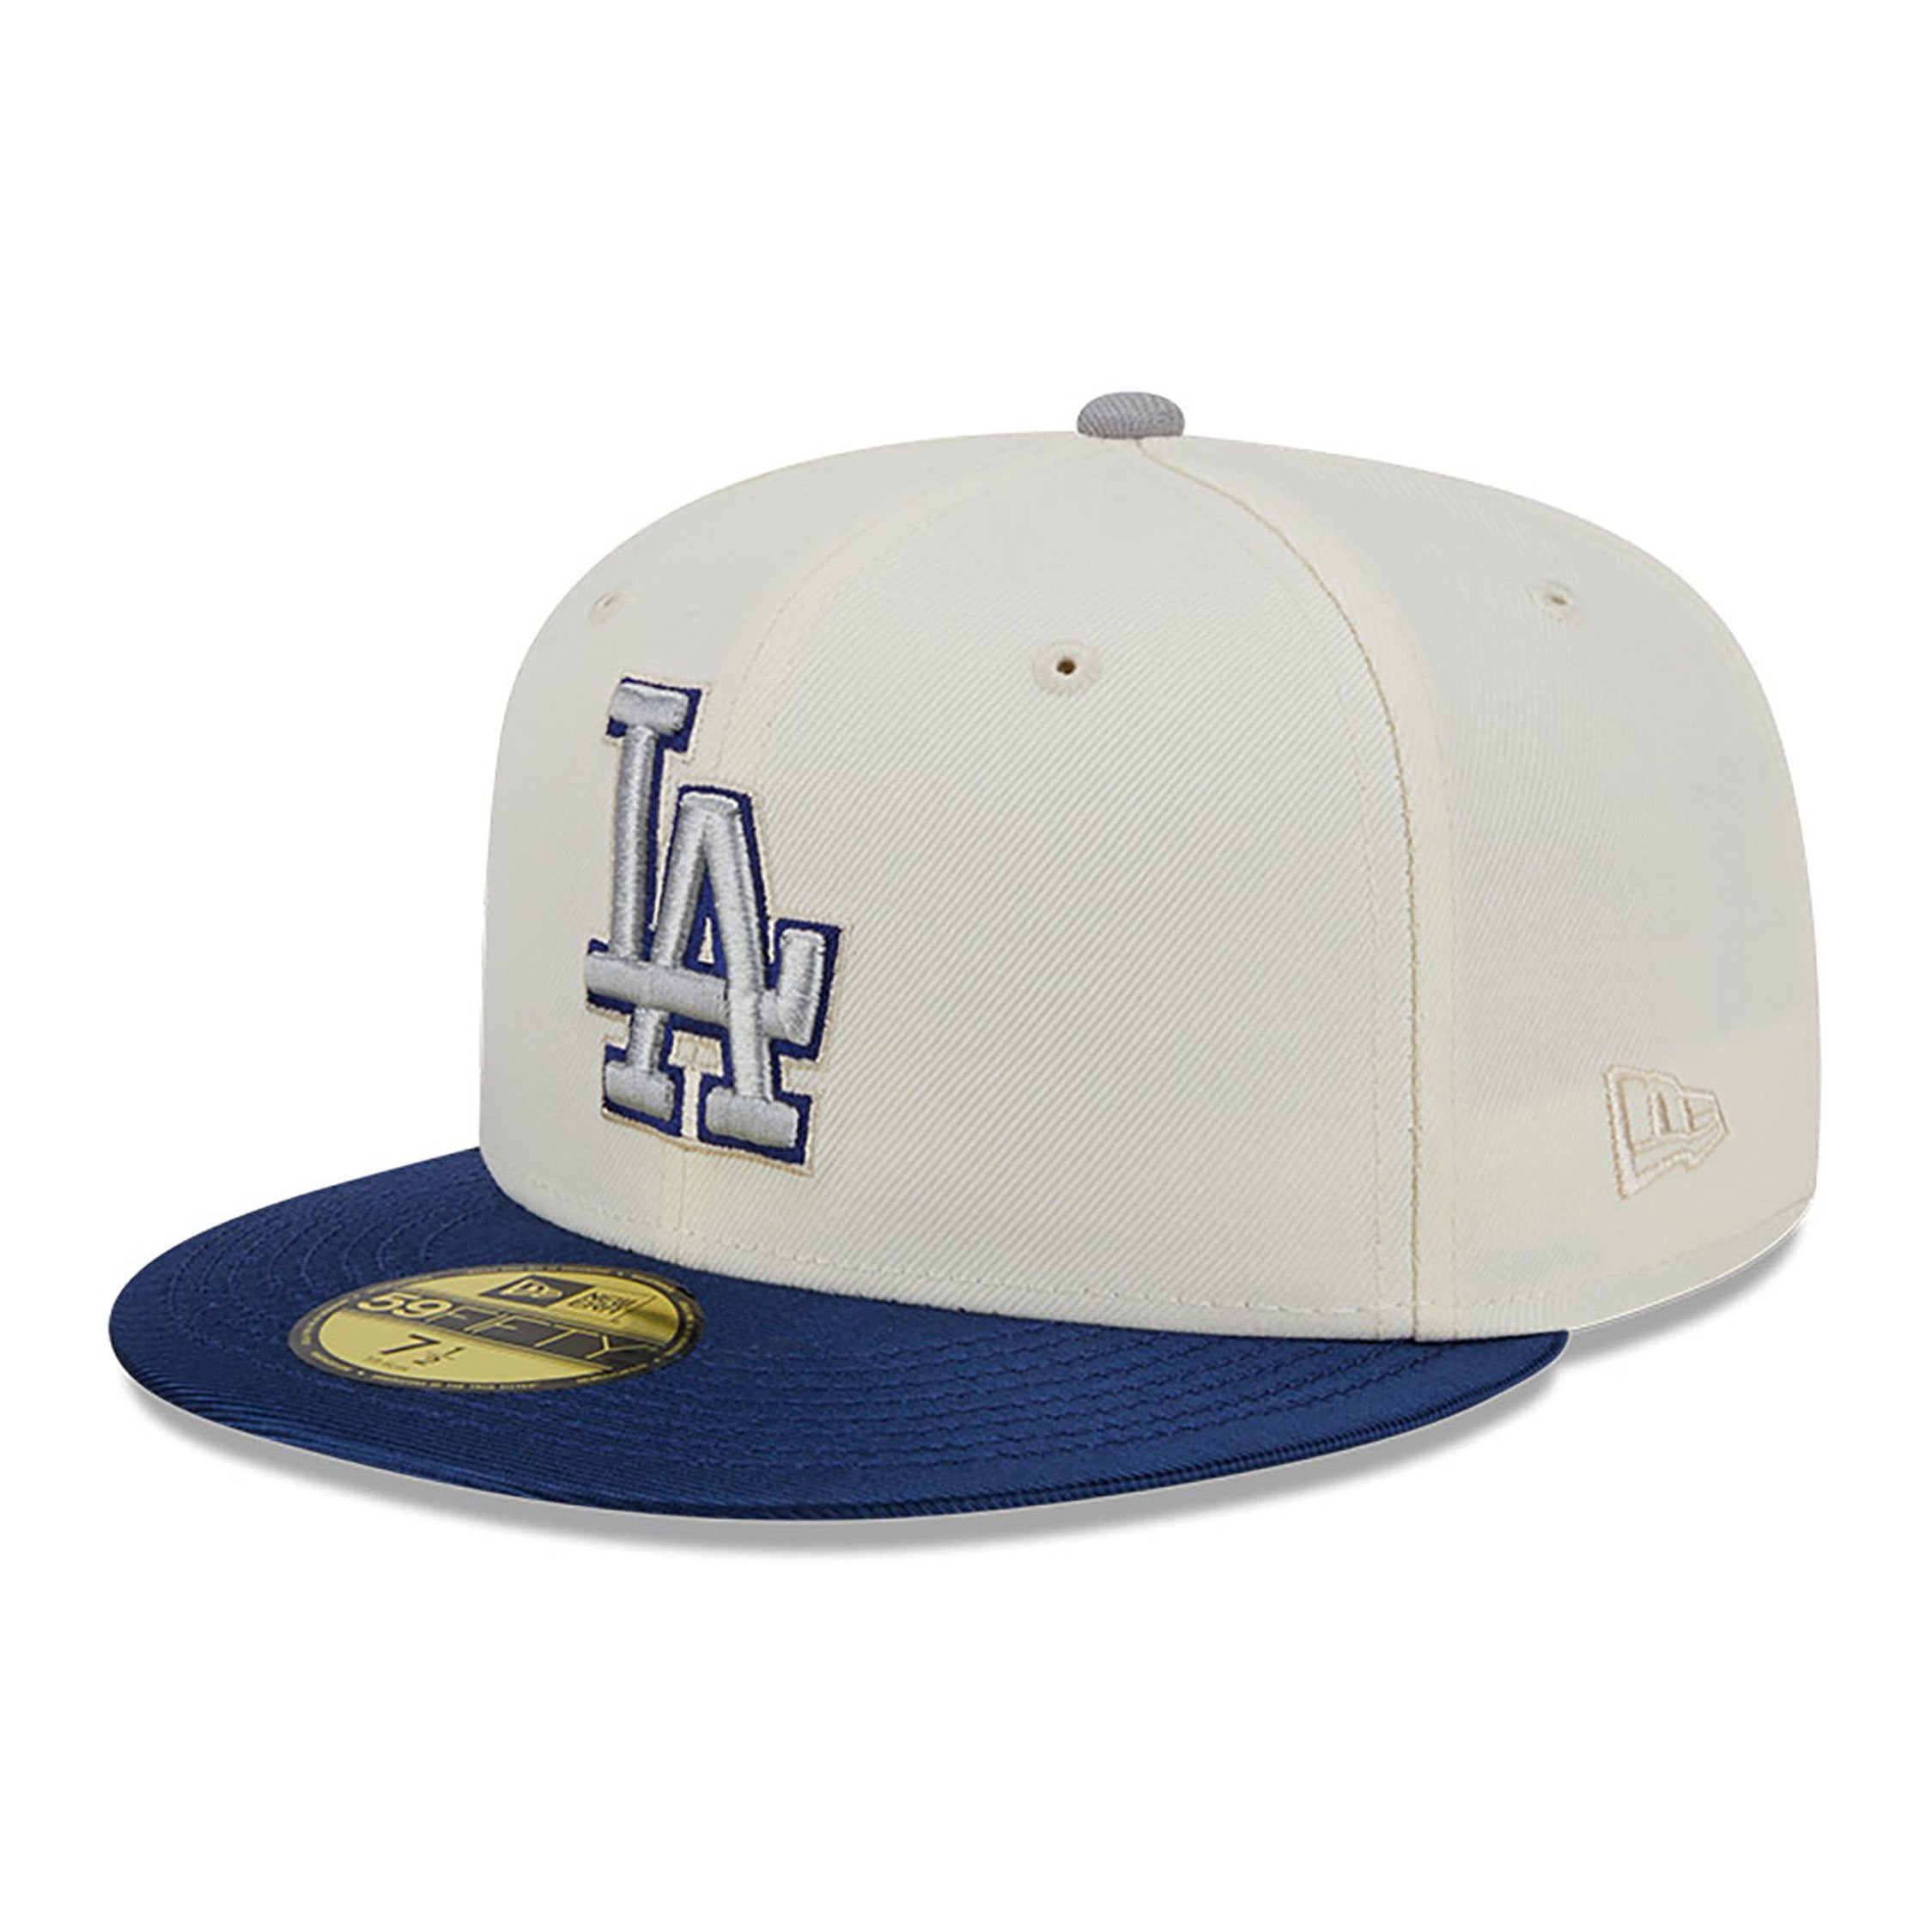 Capsule Hats Exclusive Philadelphia Phillies Sampler Pack New Era